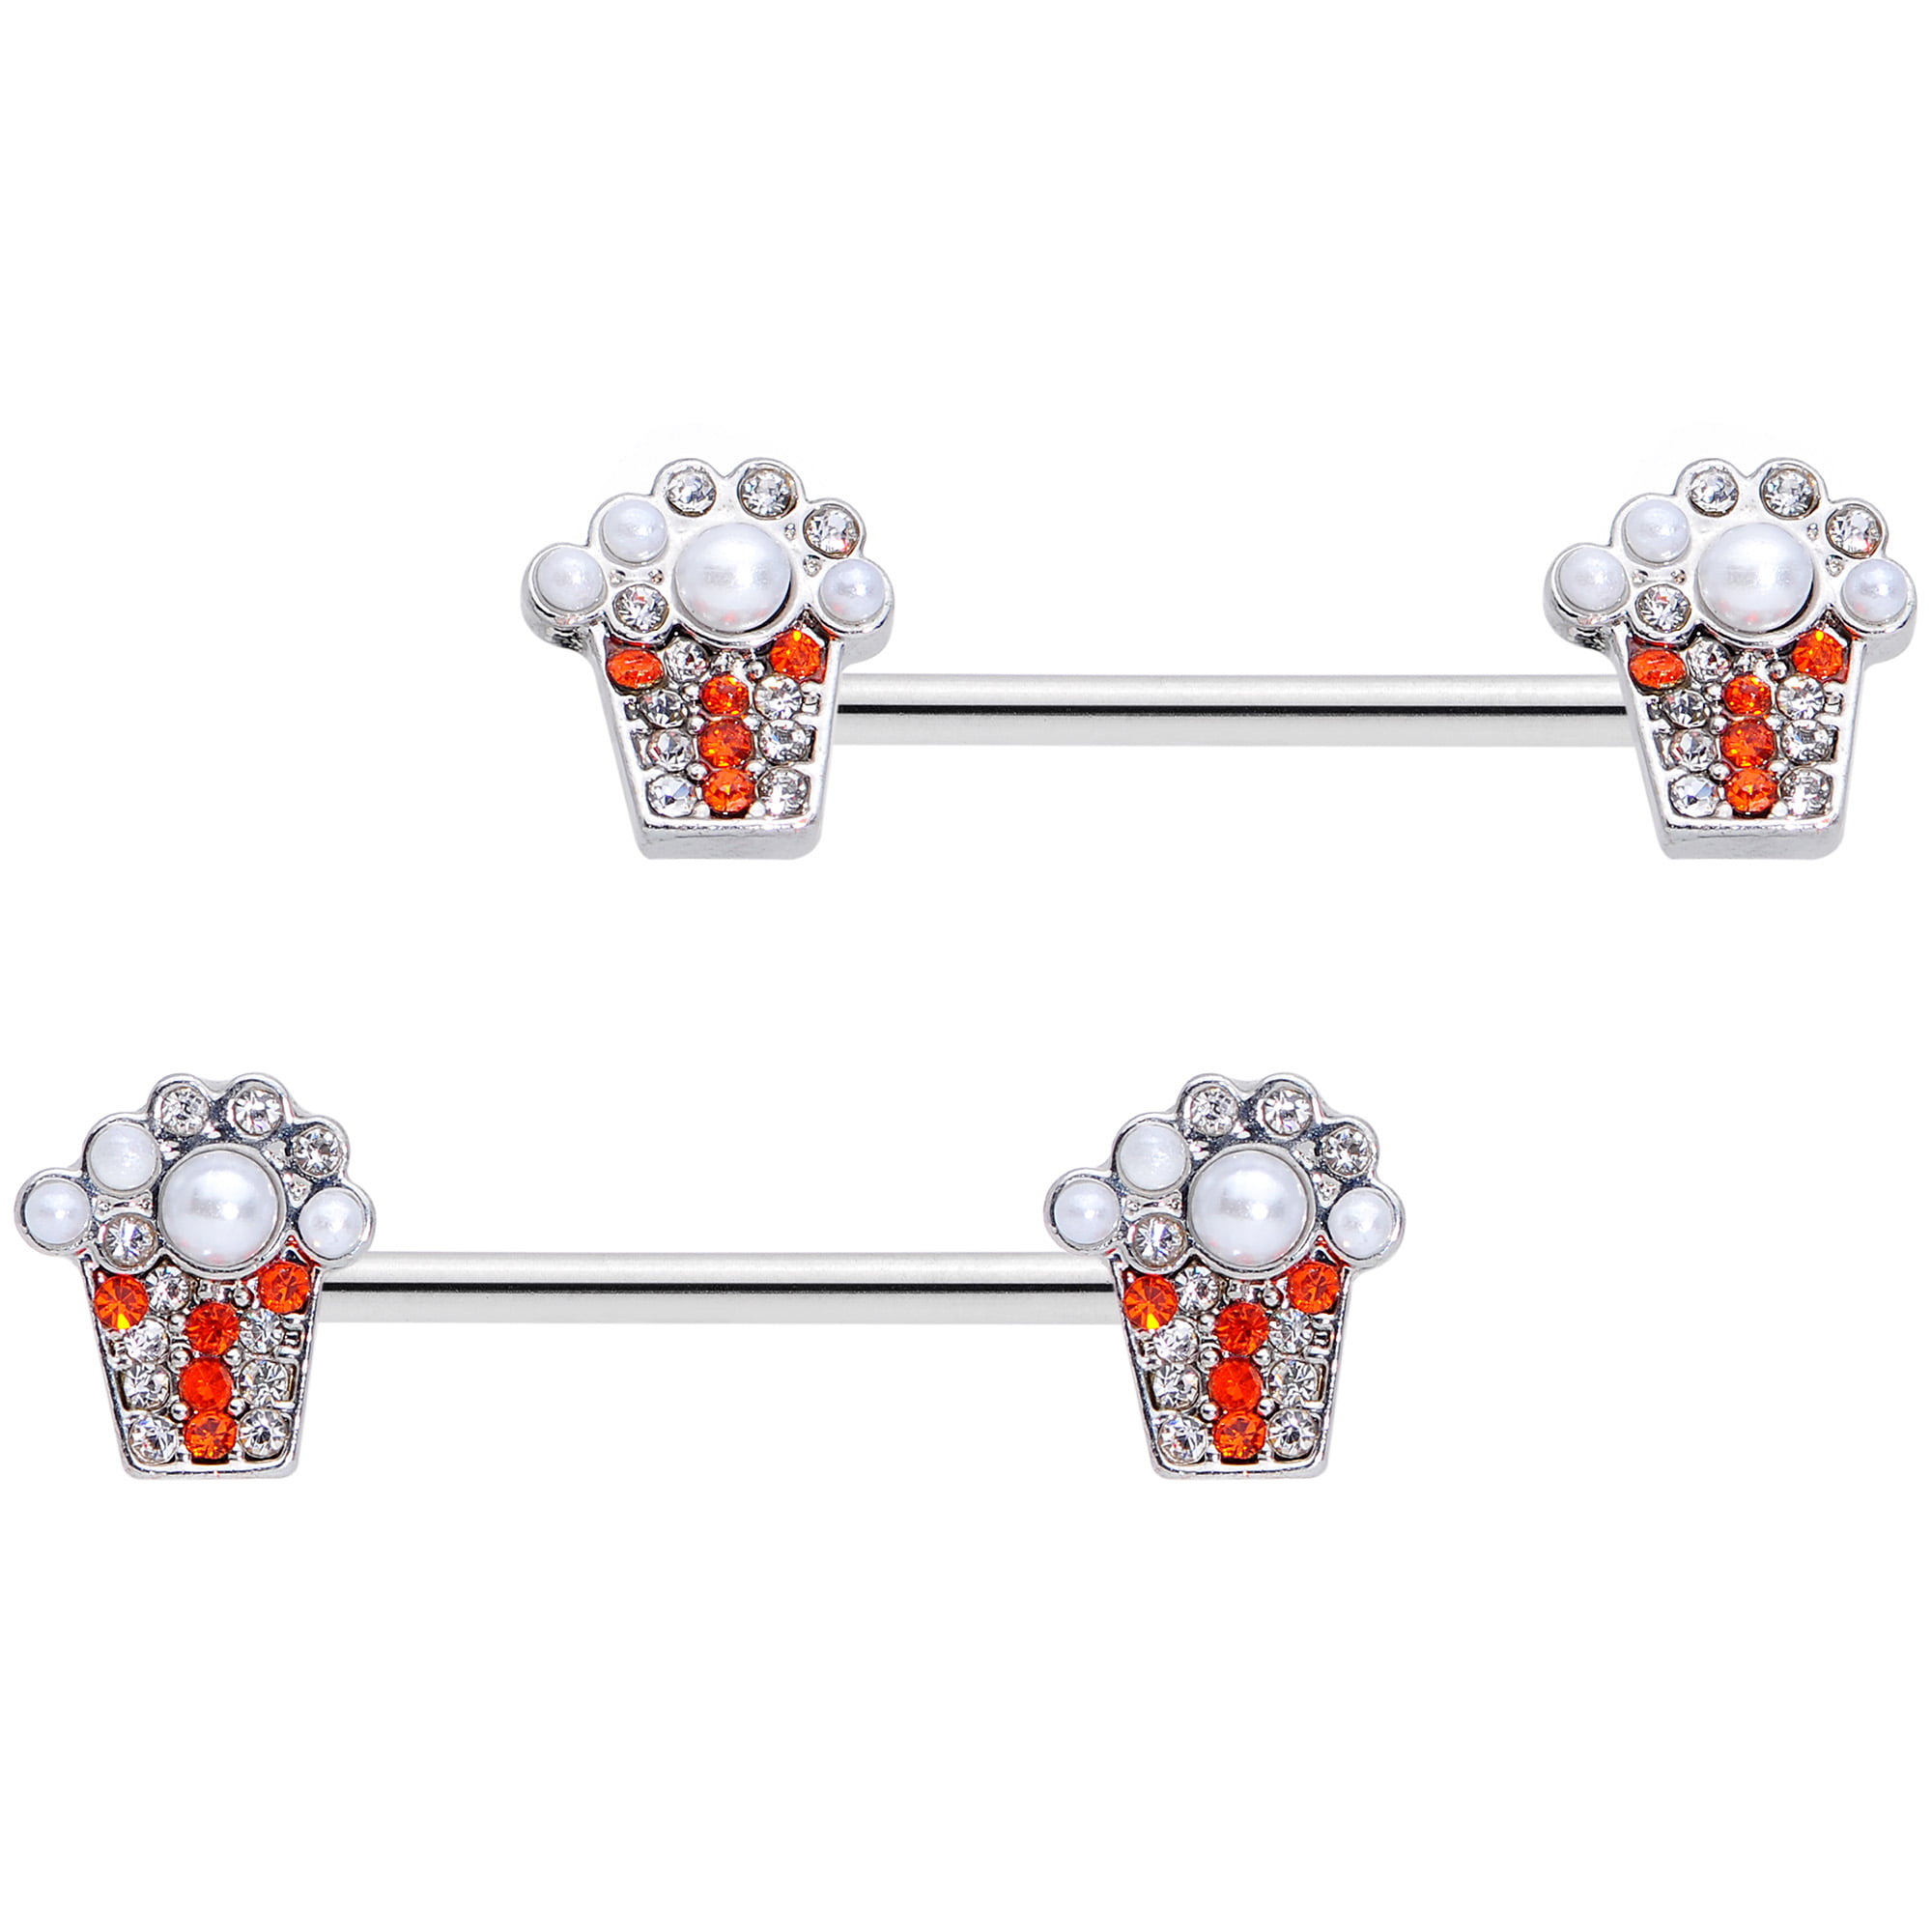 50pcs Body Jewelry 14g~1.6mm Double Gems Tongue Ring Nipple Shield Bar Barbells 